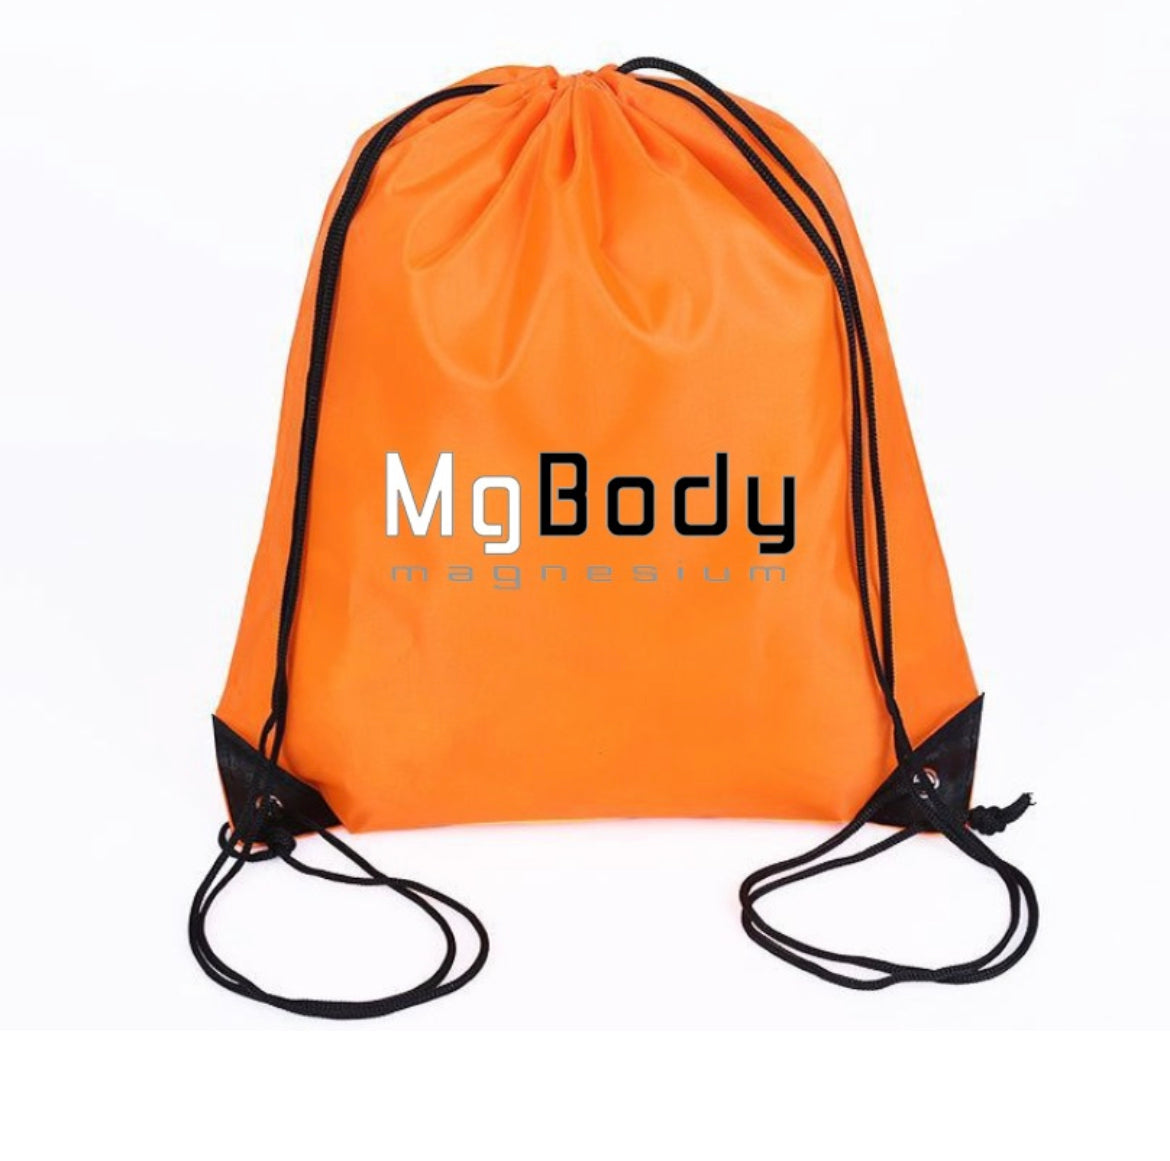 The MgBody Drawstring Bag